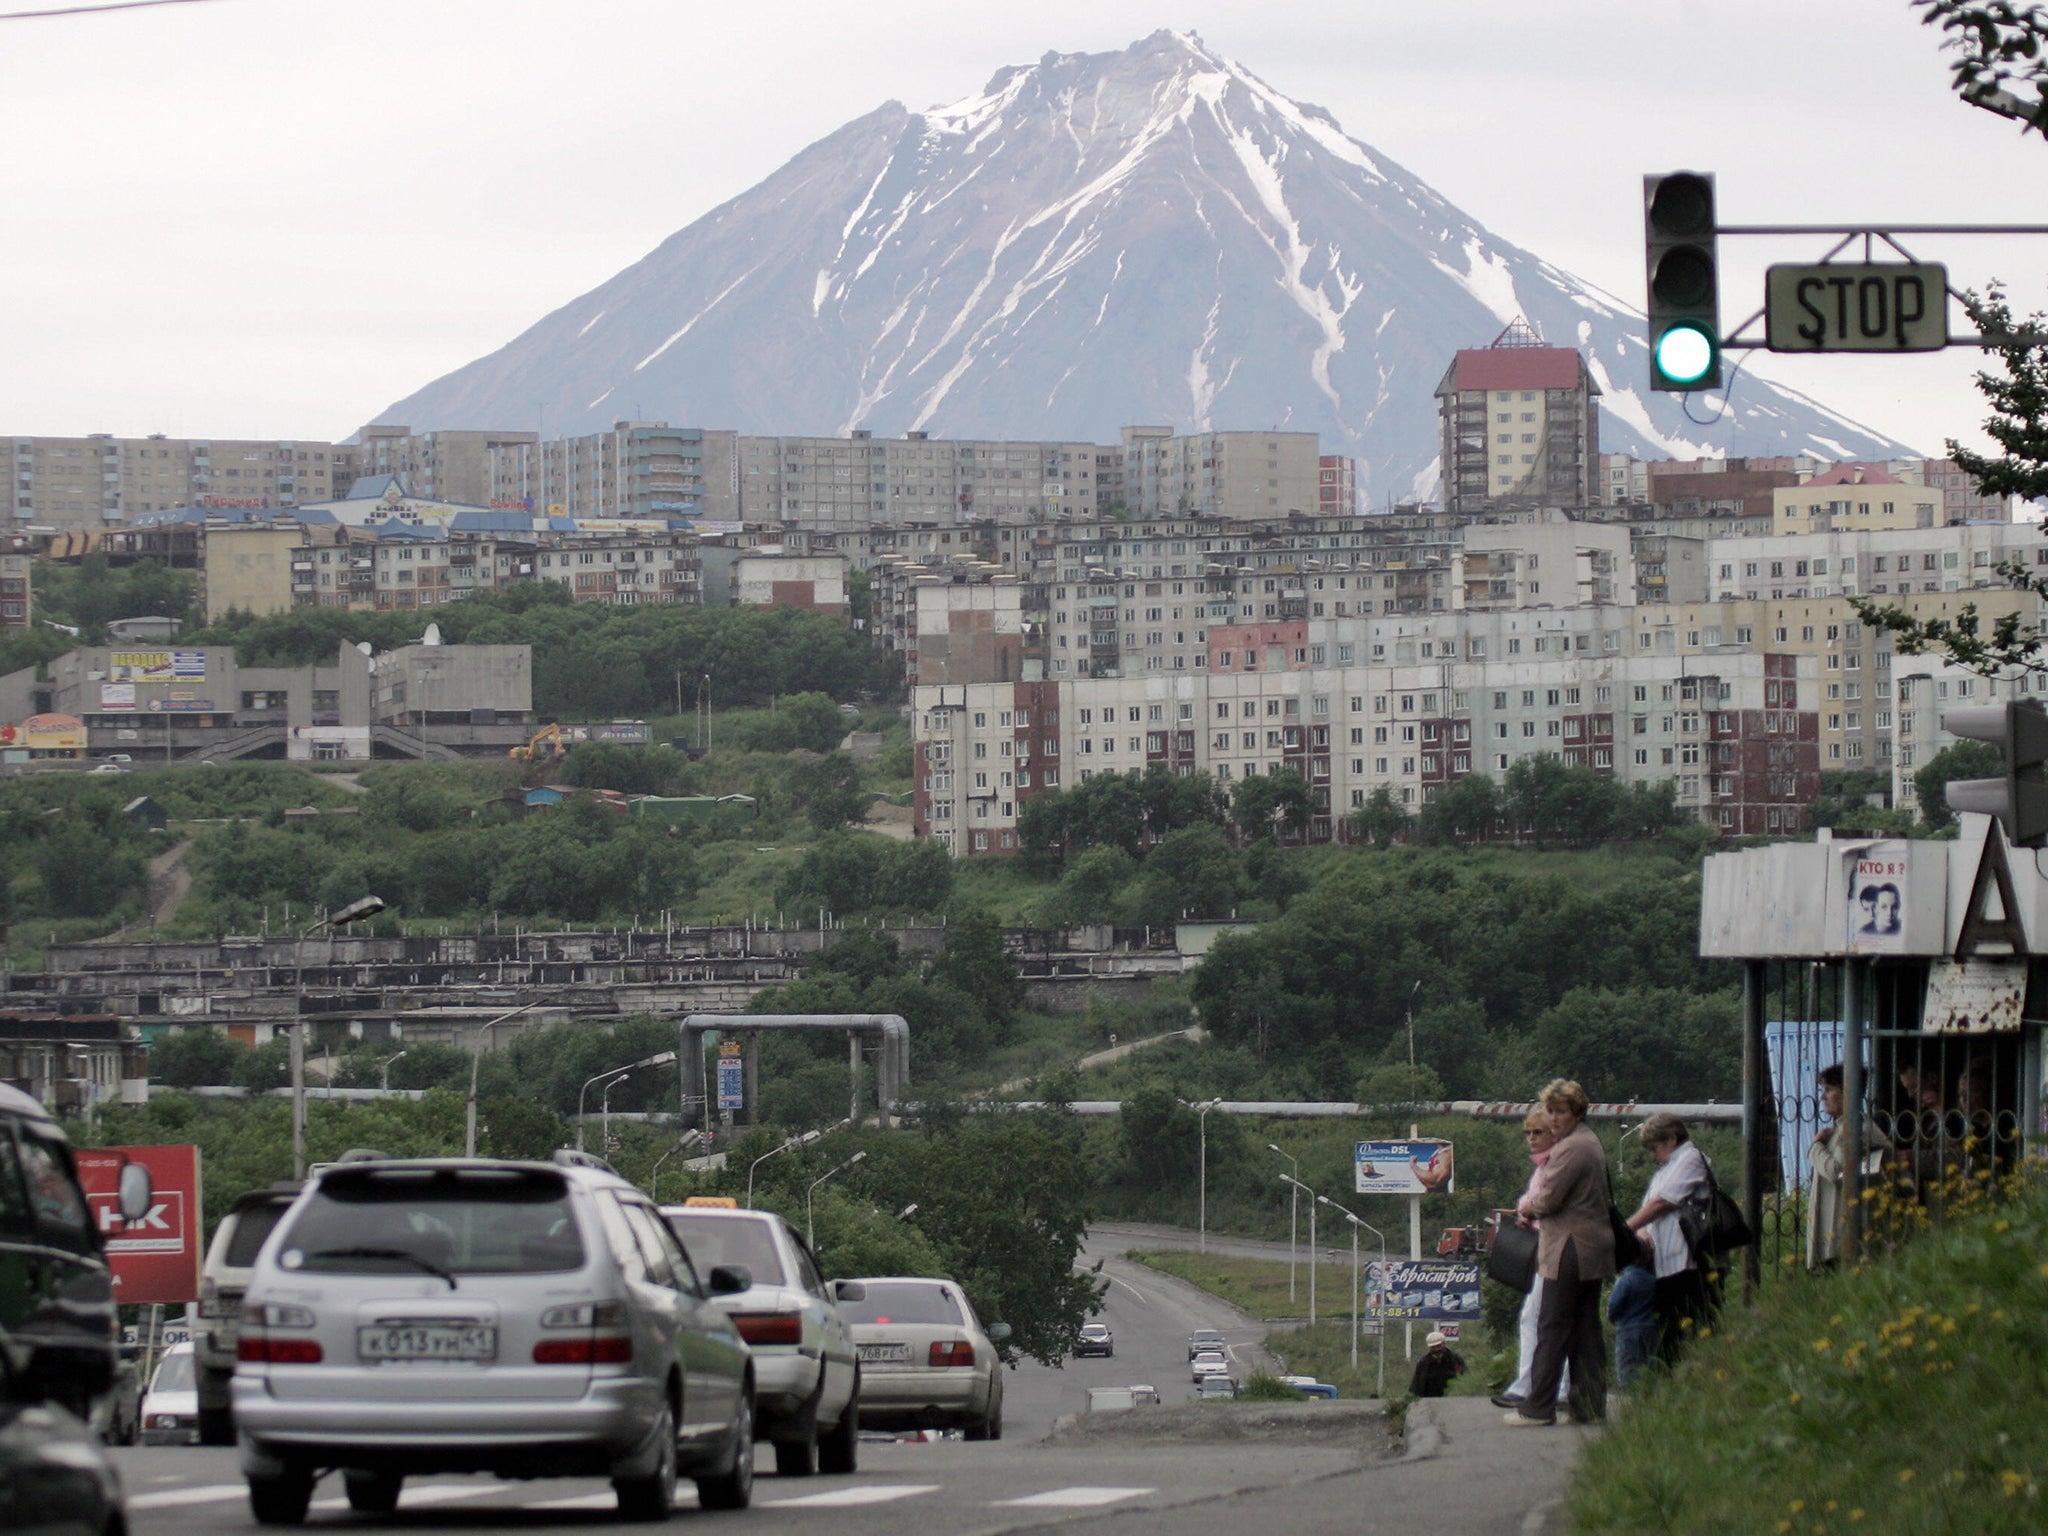 Petropavlovsk-Kamchatsky city stands in front of the Klyuchevskaya Sopka mountains